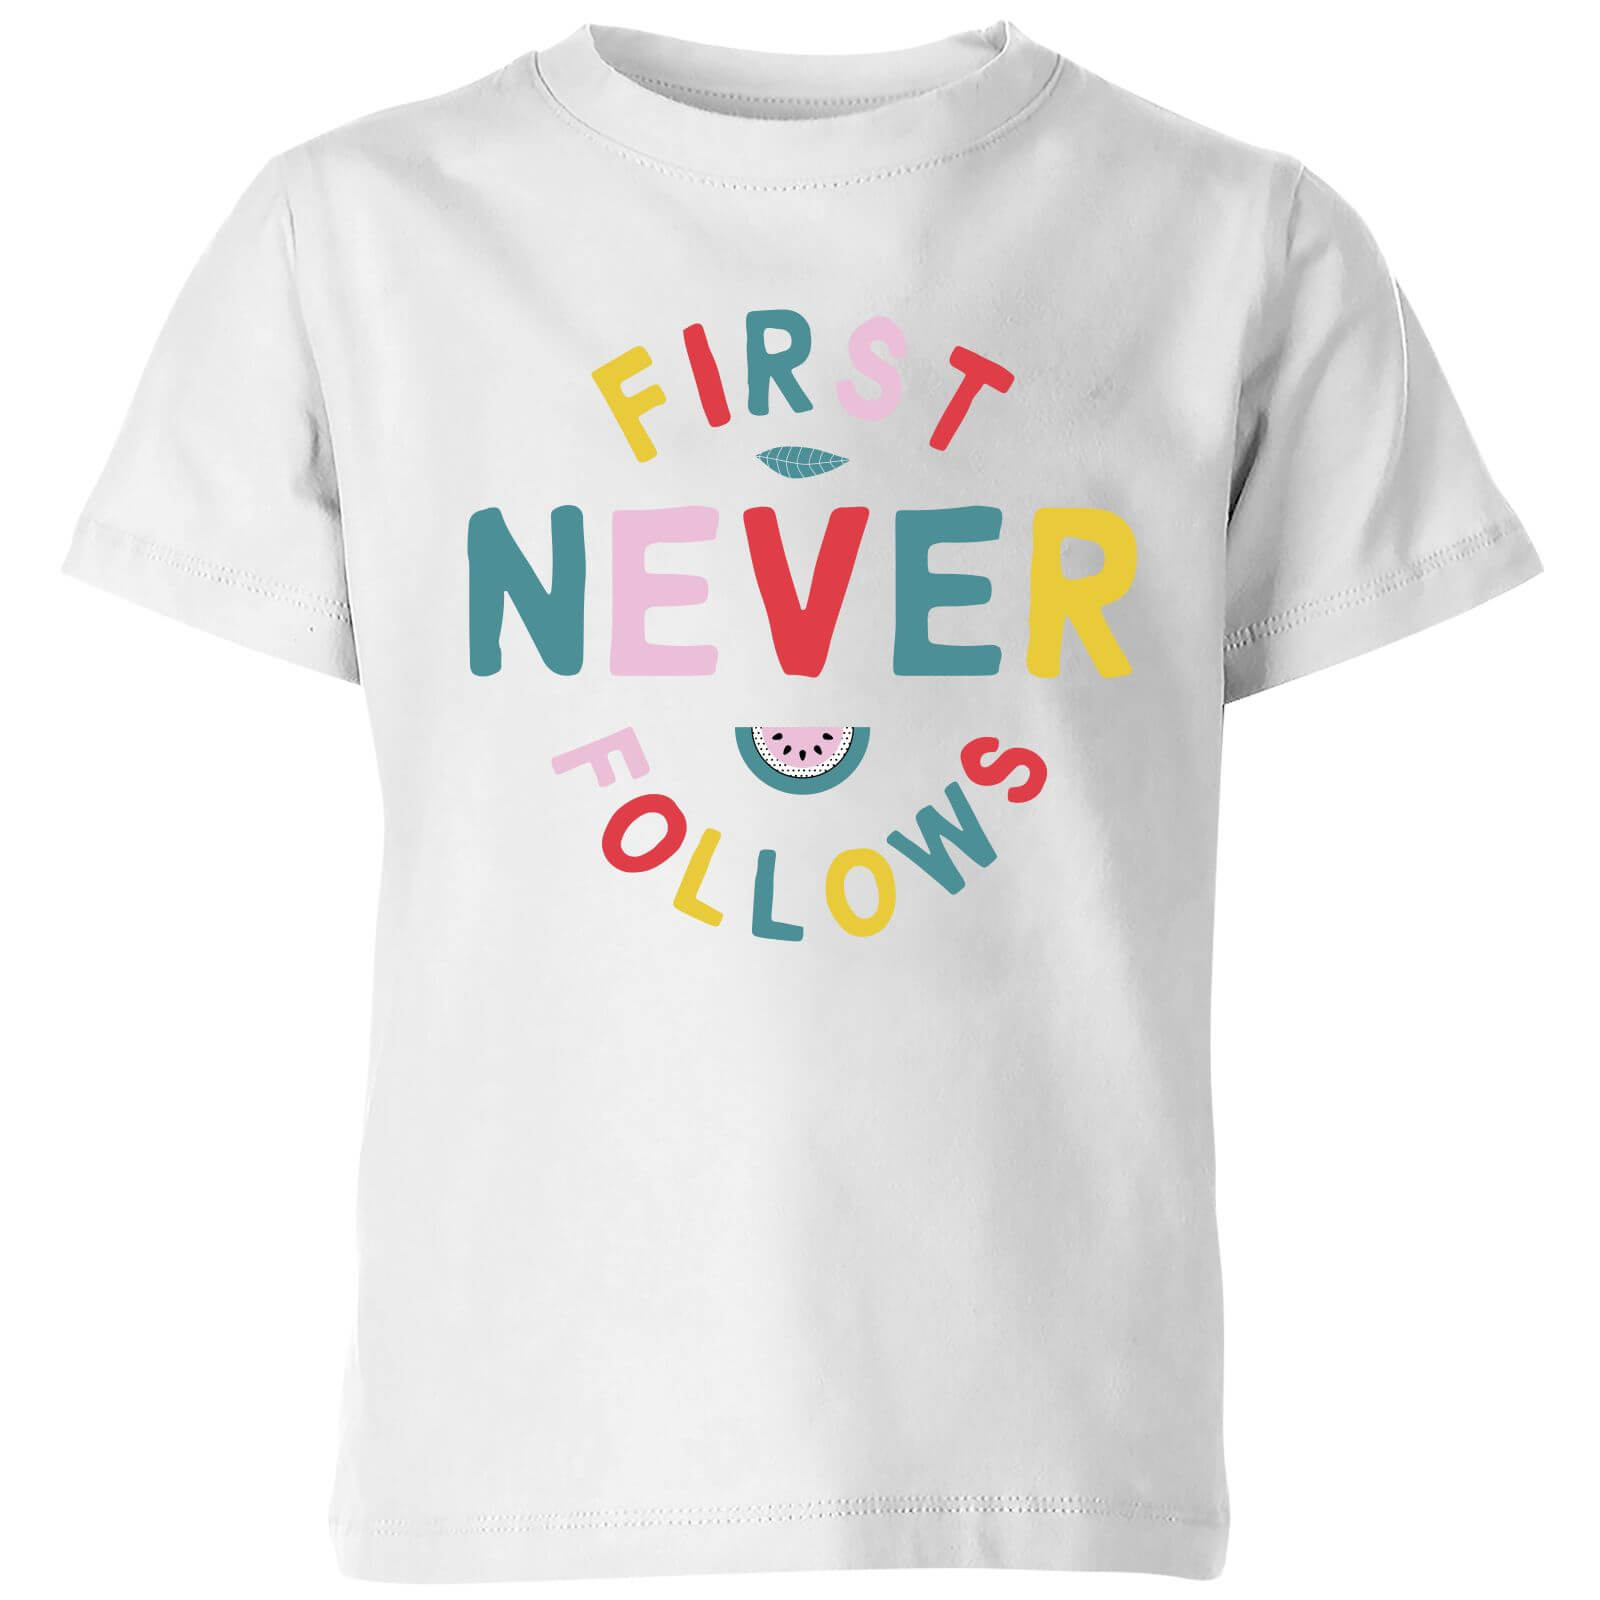 My Little Rascal First Never Follows Kids' T-Shirt - White - 3-4 Years - White